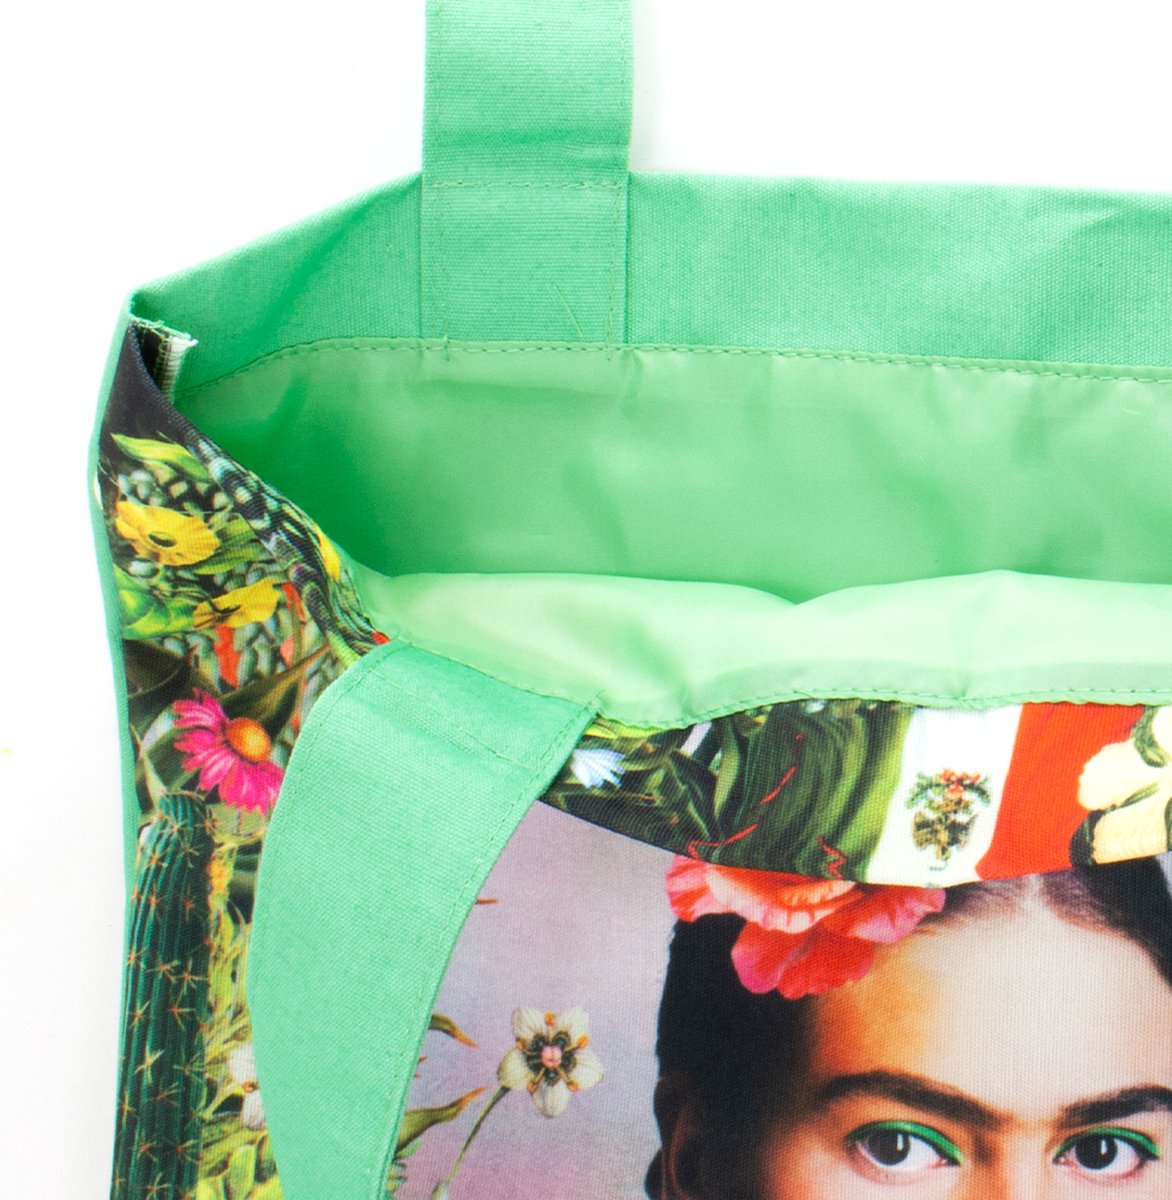 Cotton Tote Bag - Frida Kahlo